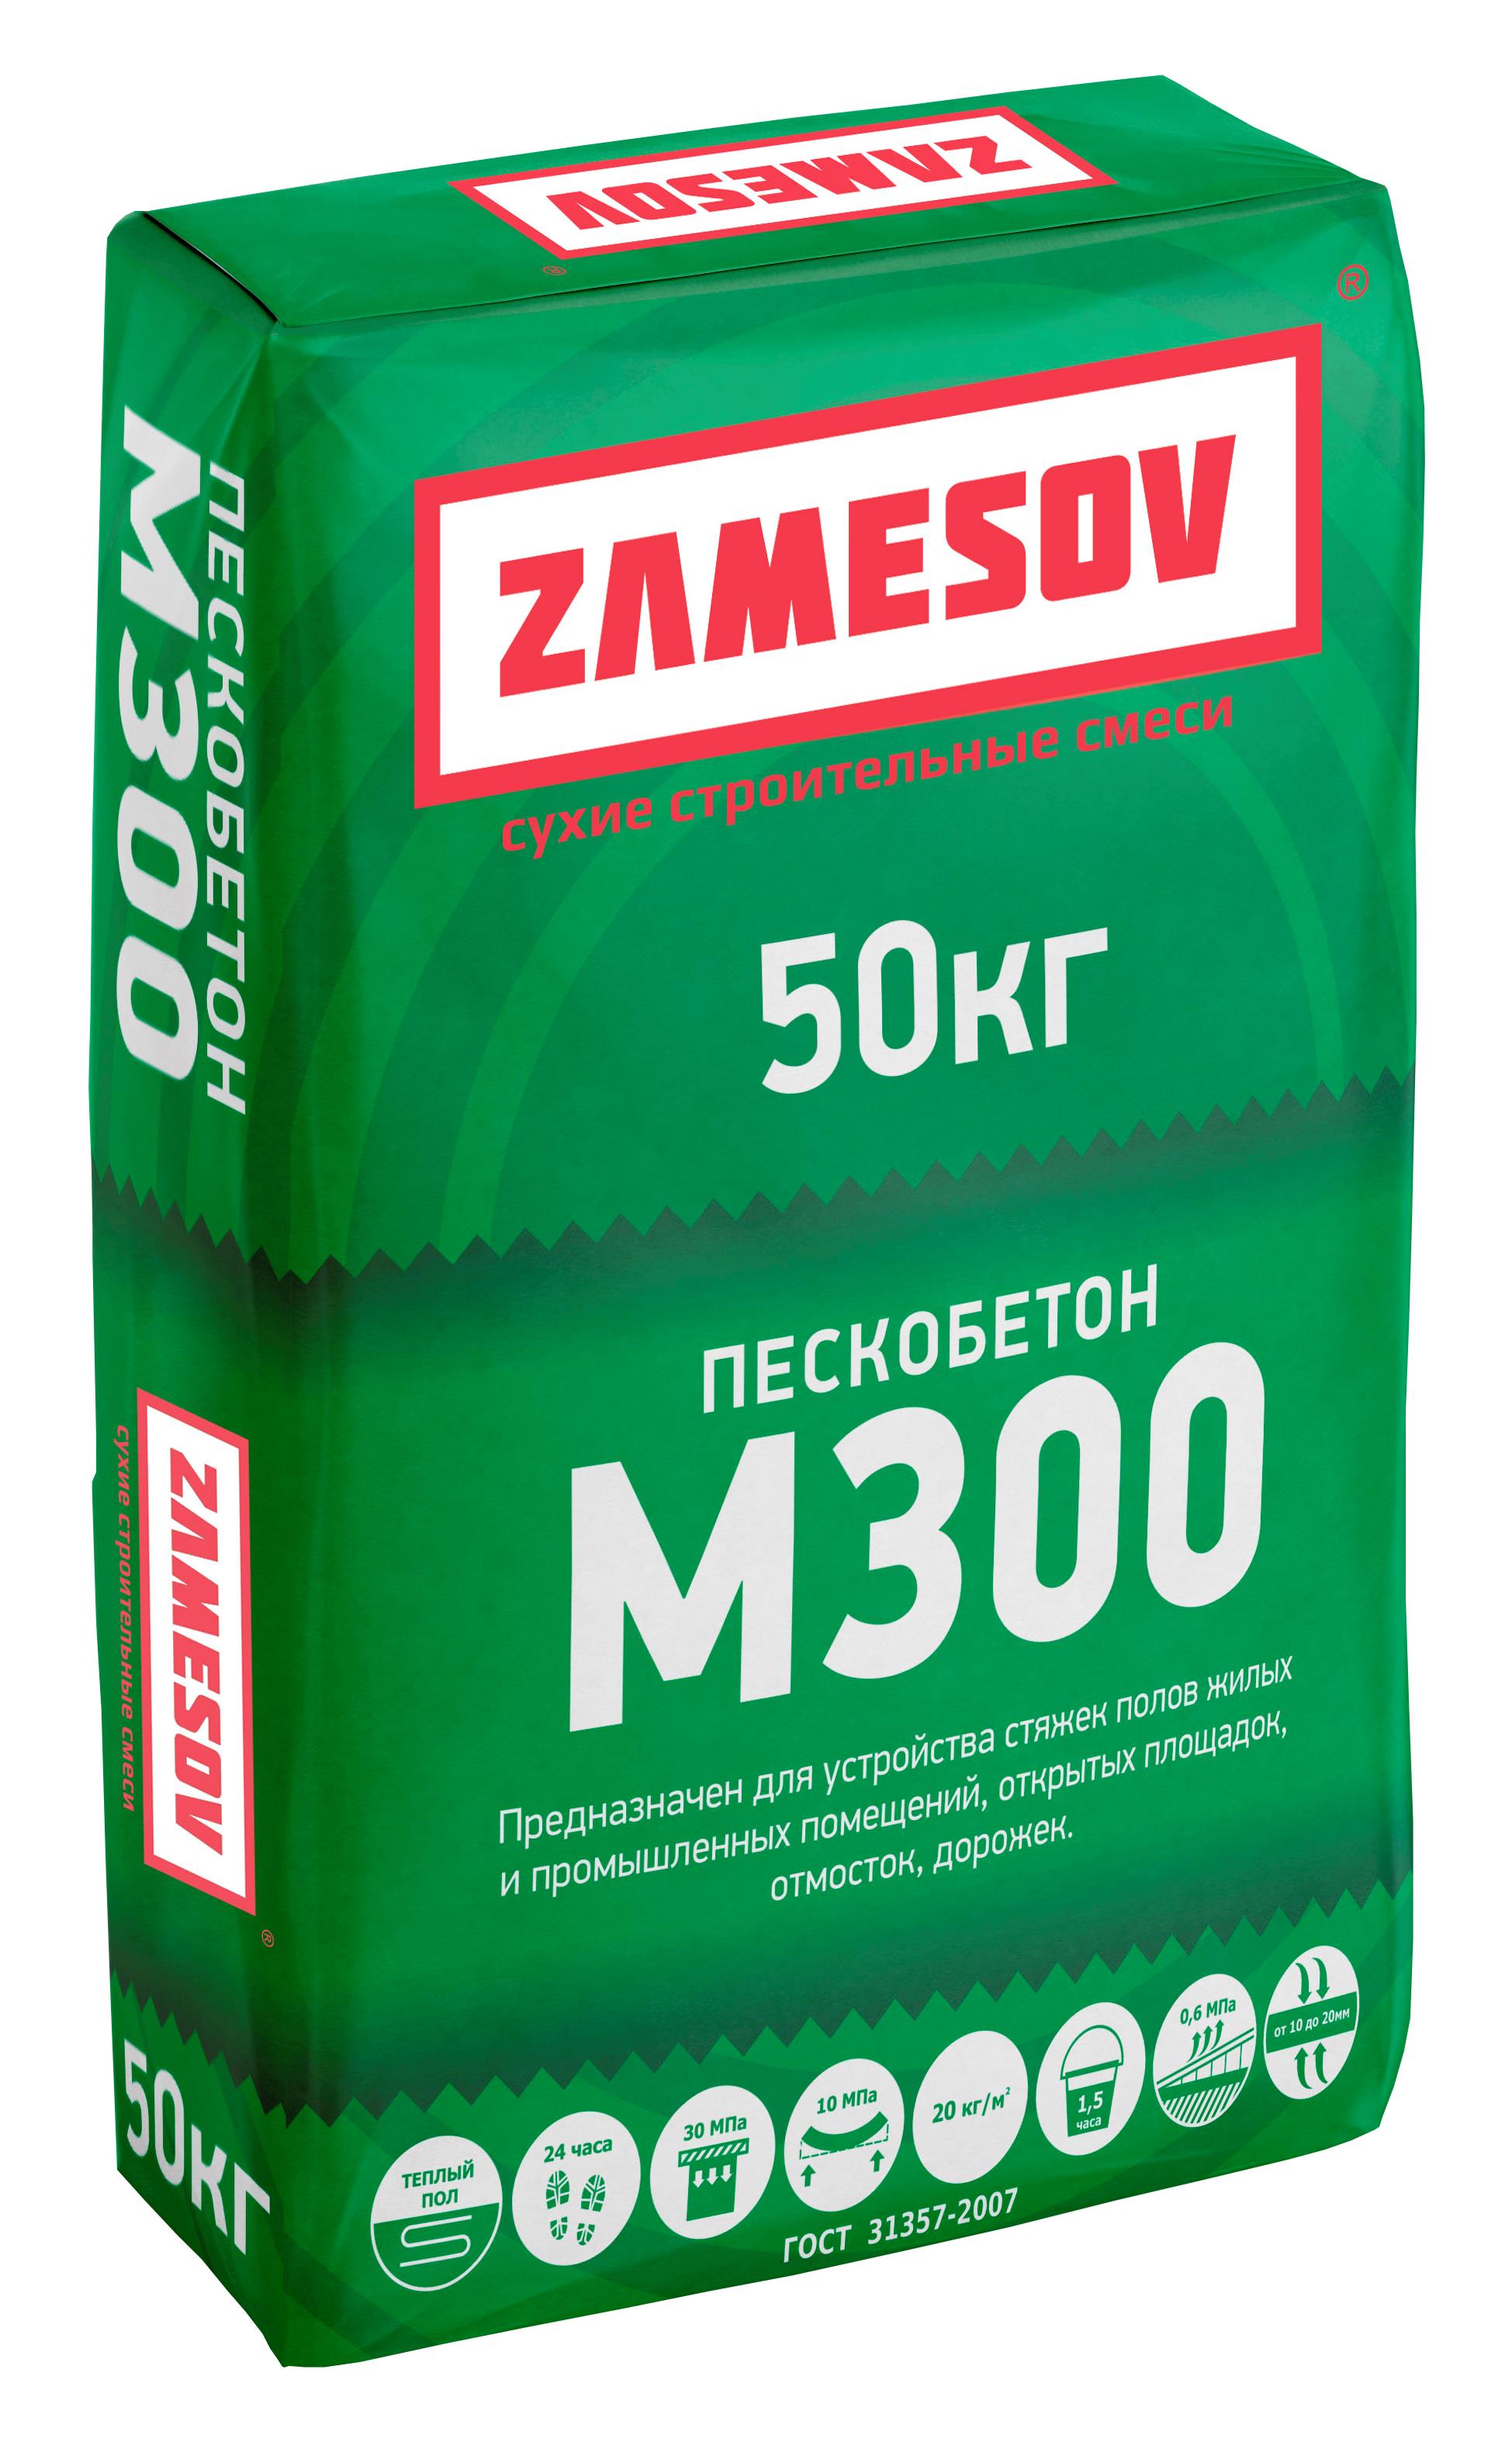 Сухая смесь М300 пескобетон (50кг) ZAMESOV